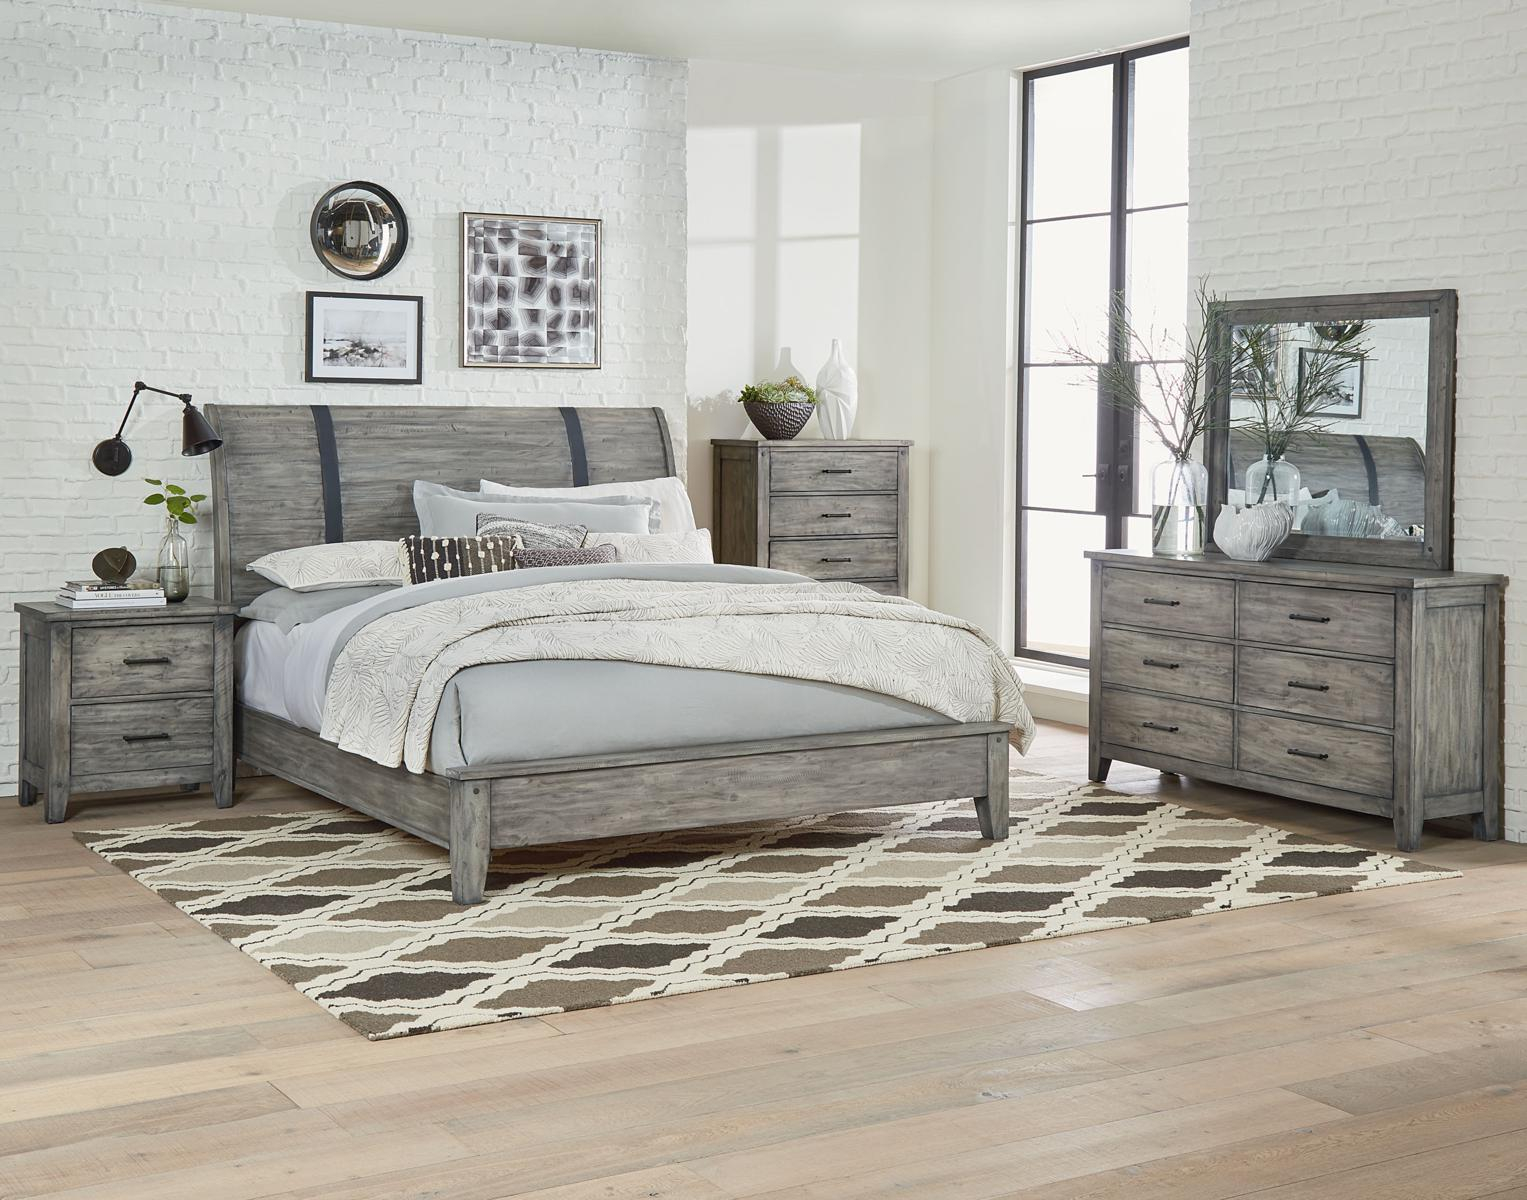 Standard Furniture Nelson 4 Piece Sleigh Bedroom Set In Grey inside measurements 1527 X 1200